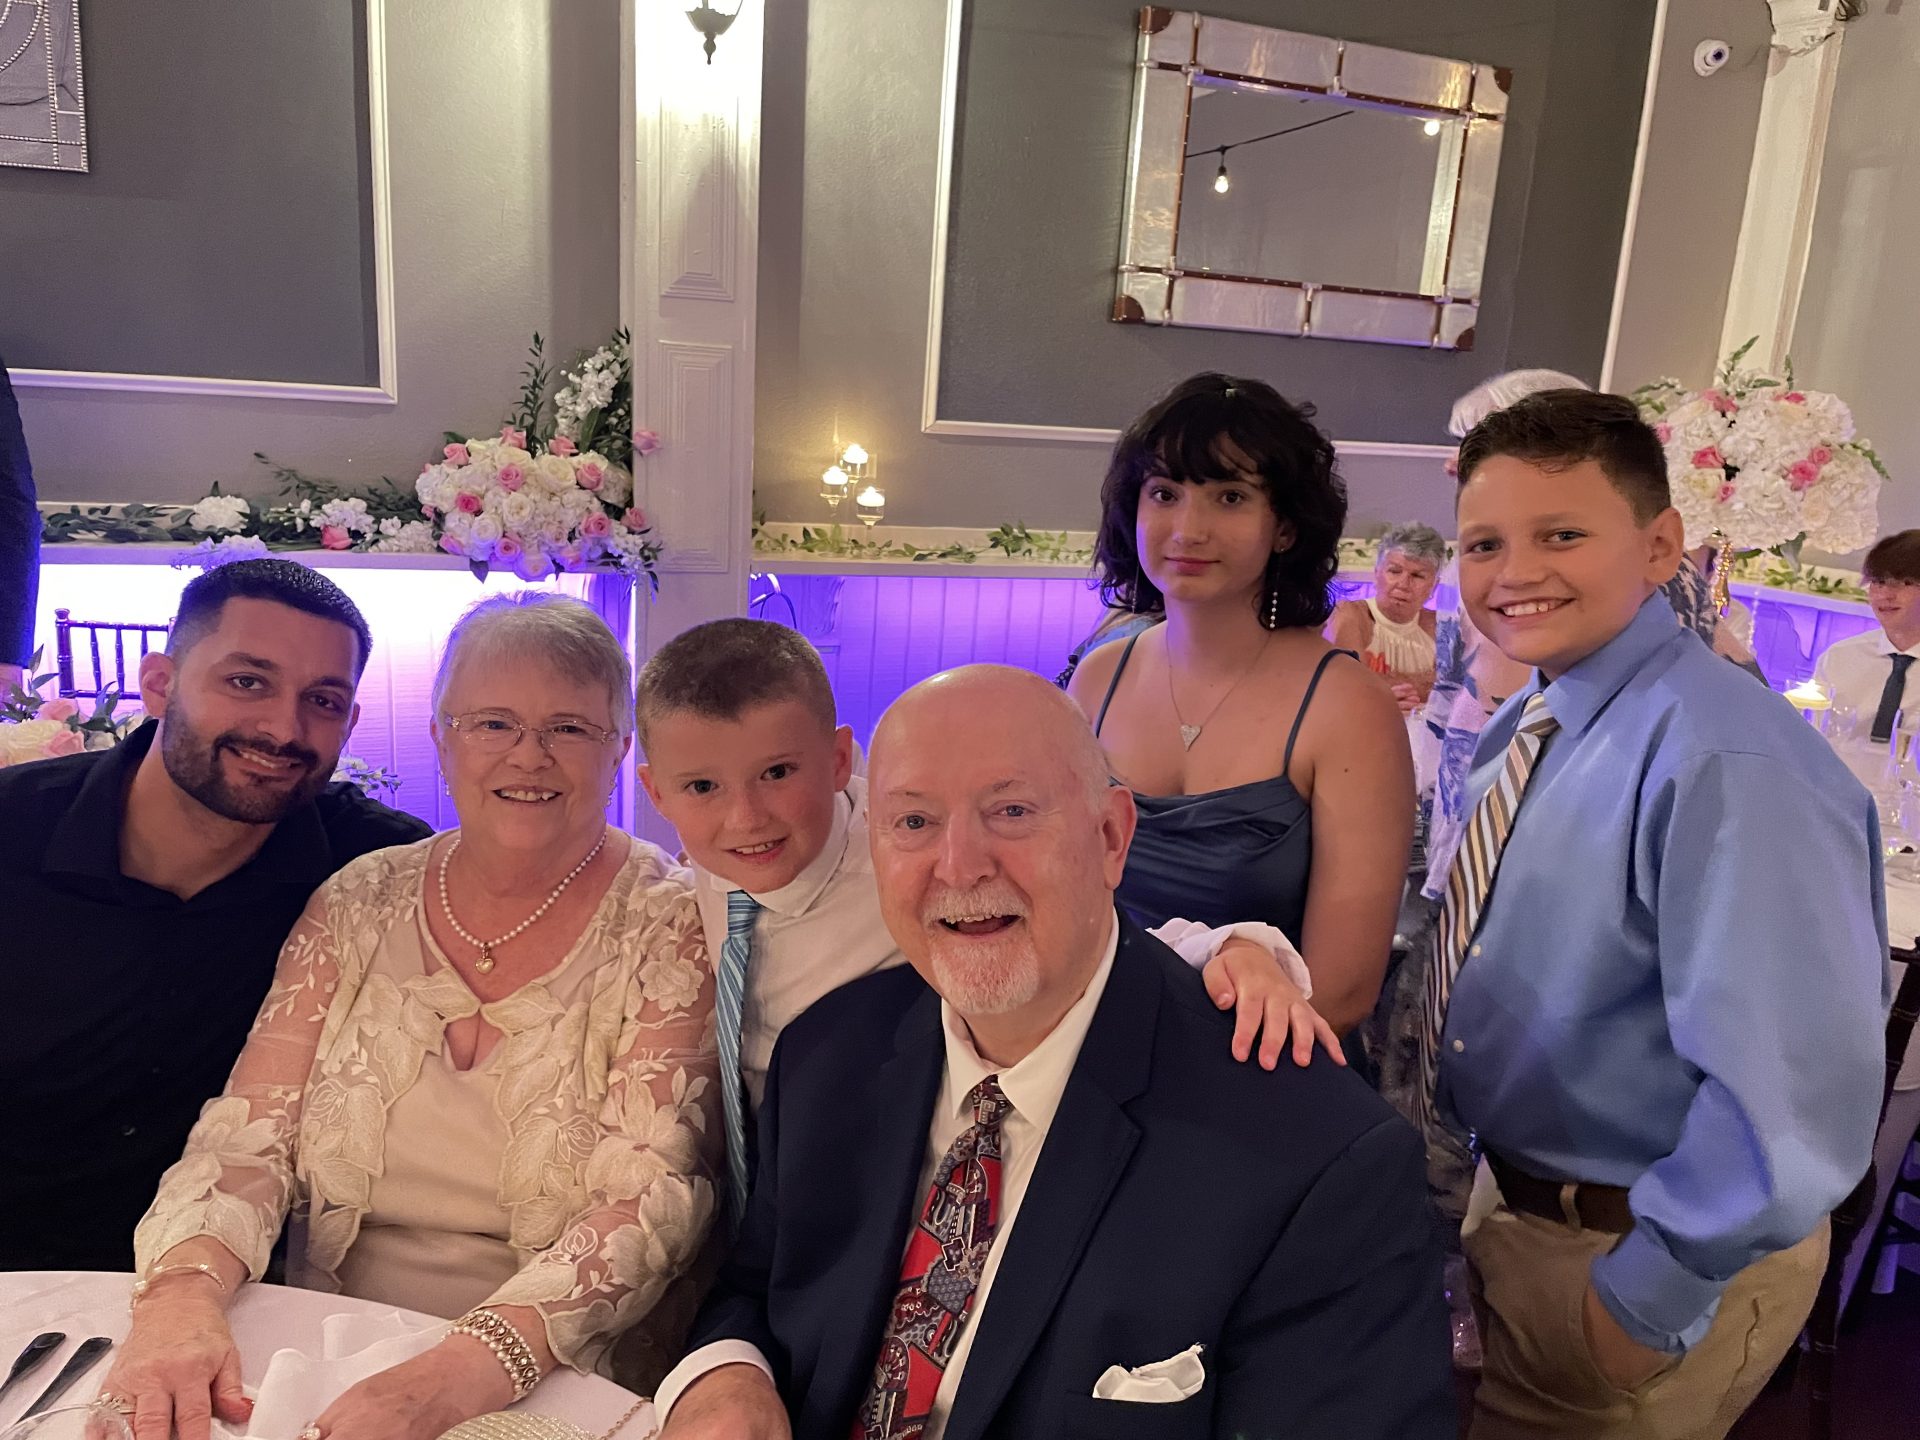 PaPa with his grandchildren.